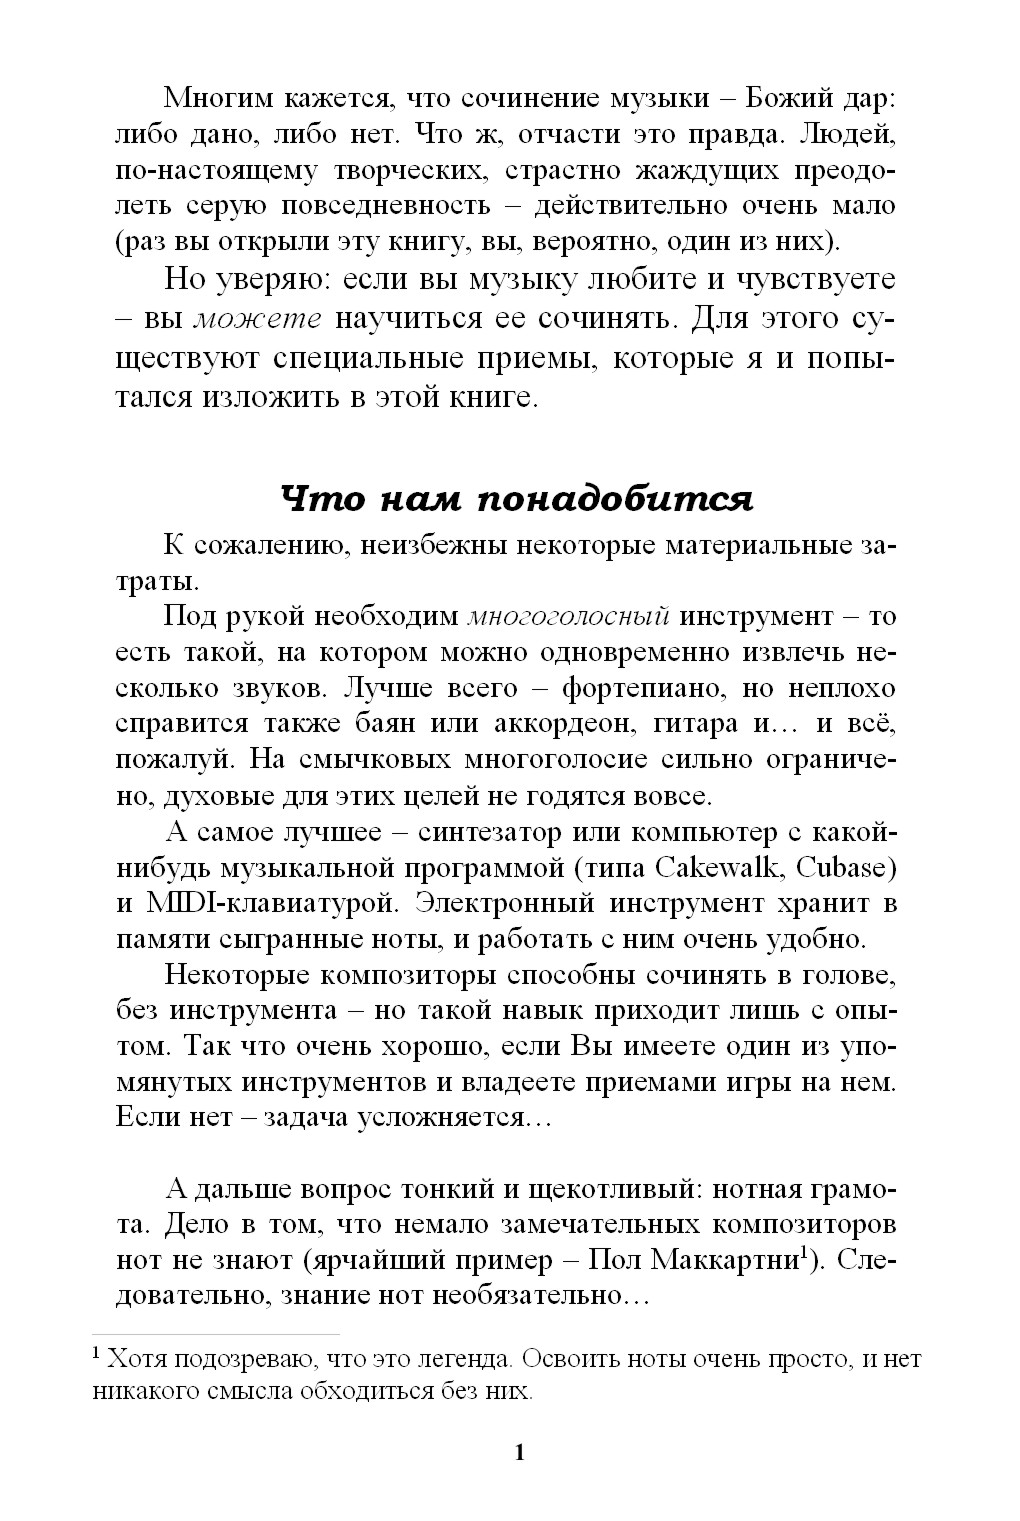 композиторский учебник А. Кофанова